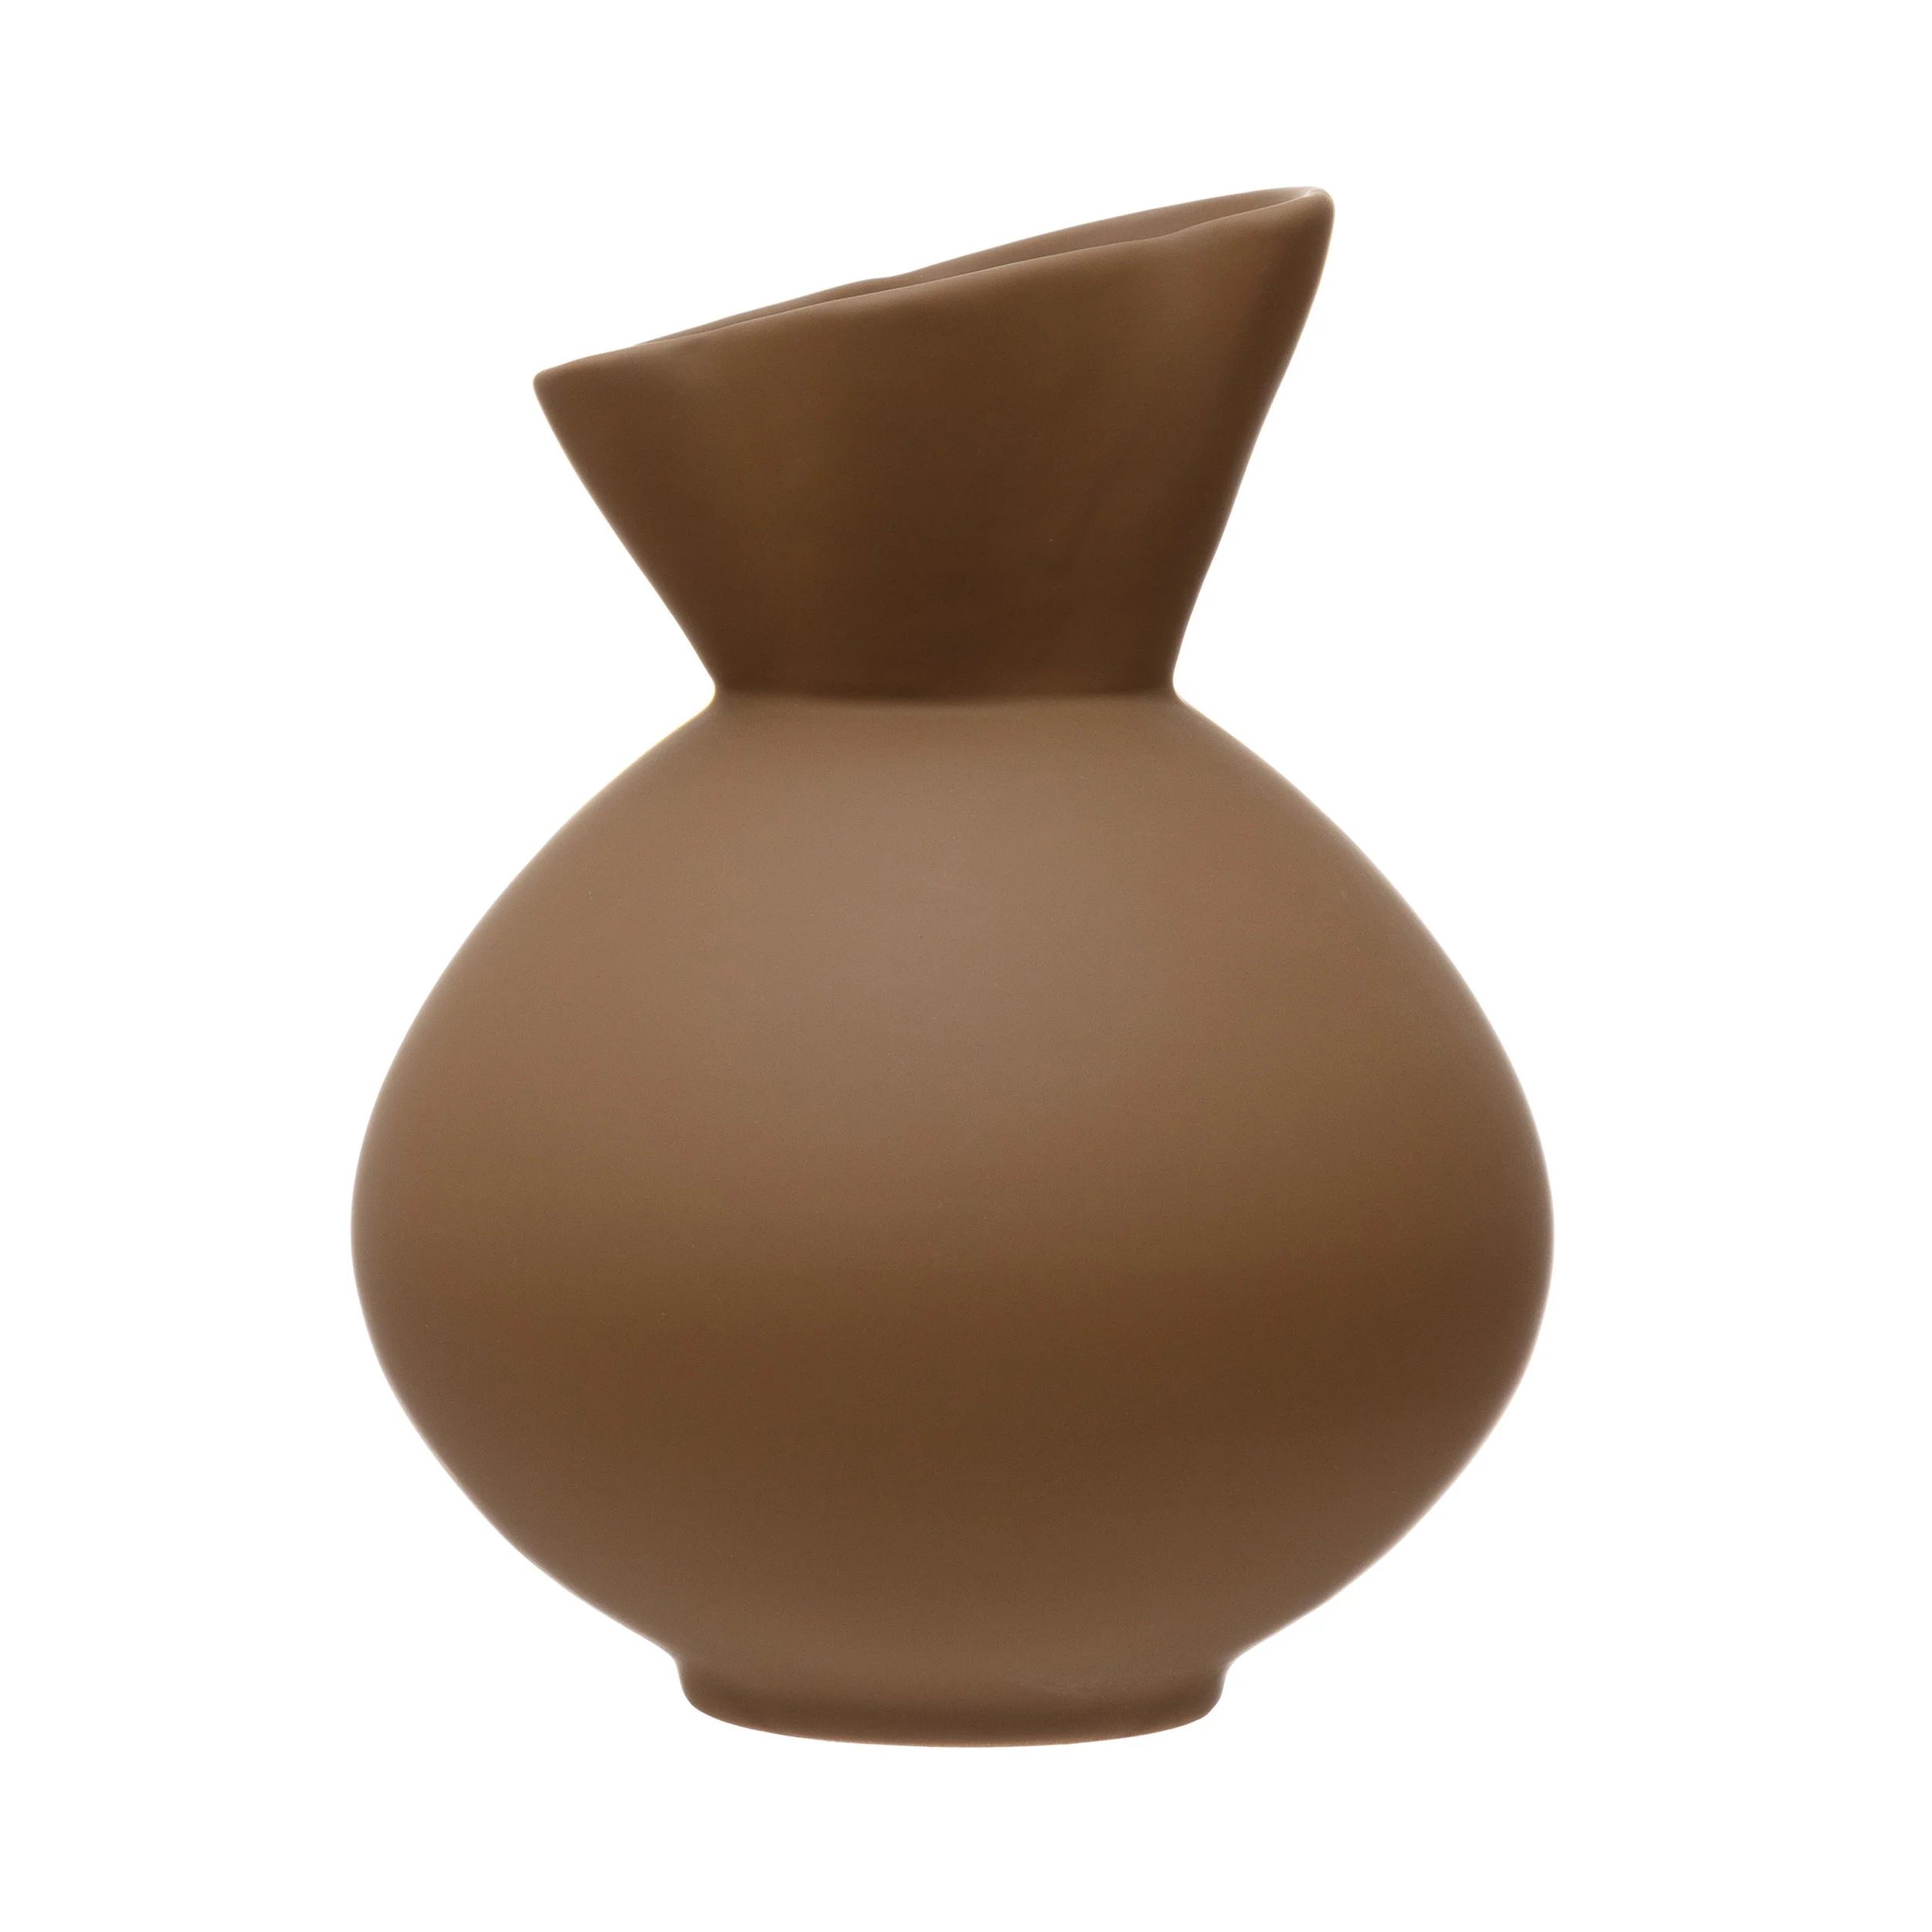 Glazed Stoneware Vase | Sweenshots Studios